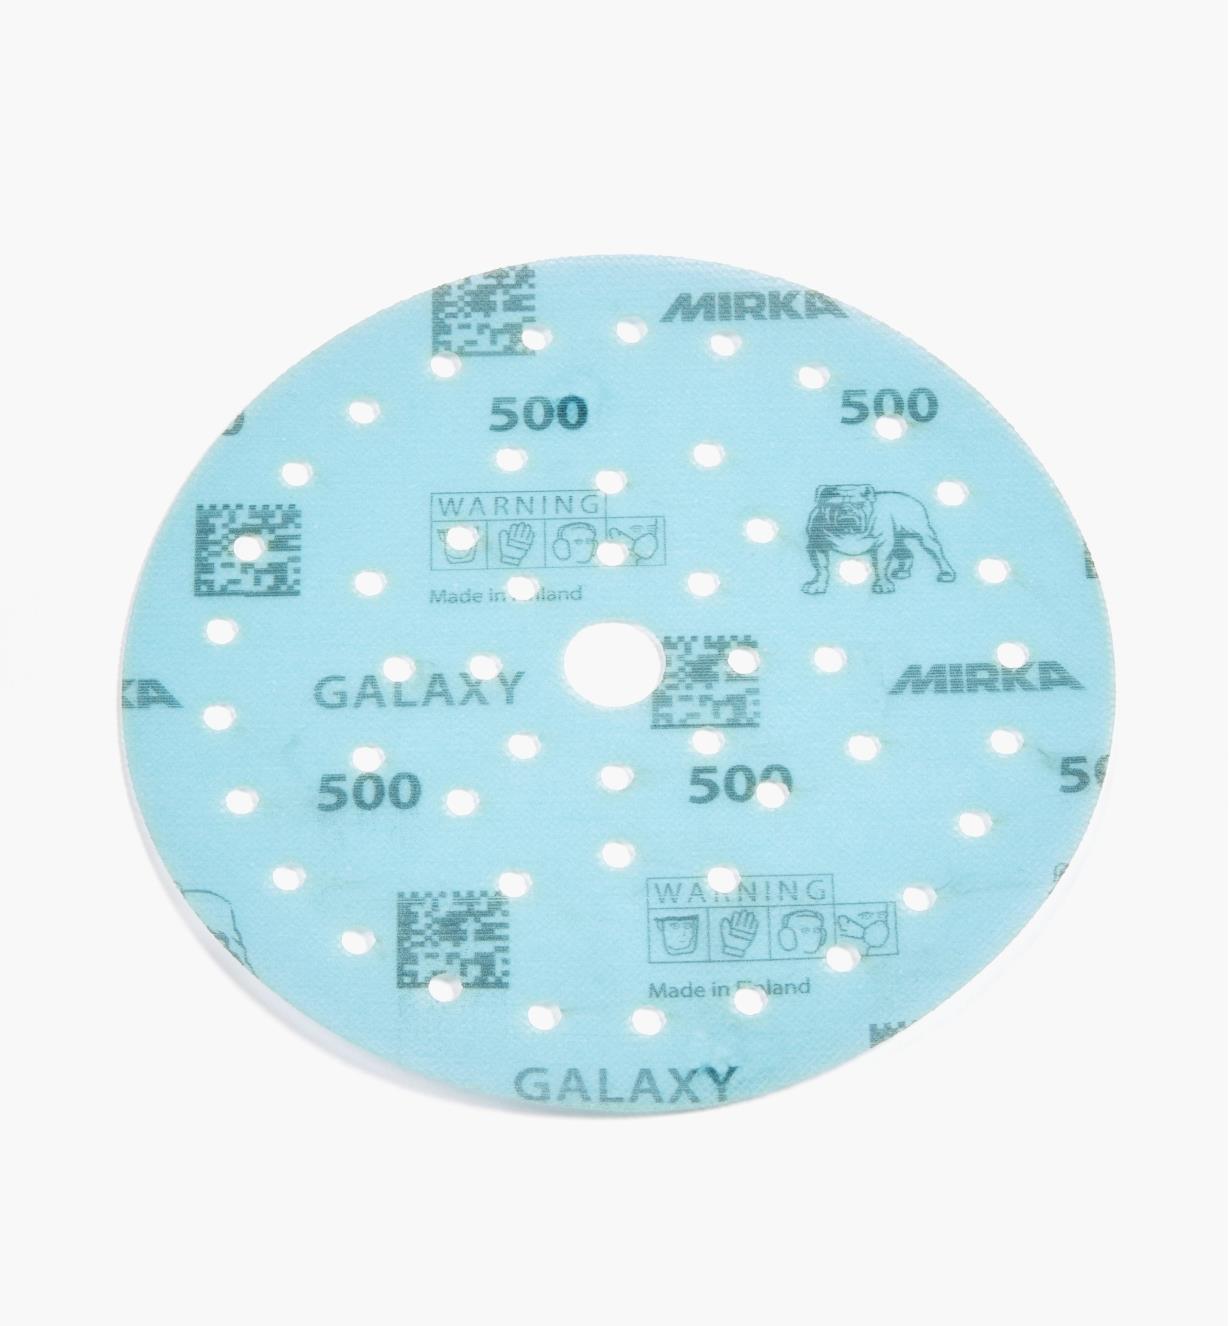 08K2151 - 500x 6" Galaxy Multifit Grip Disc, ea.